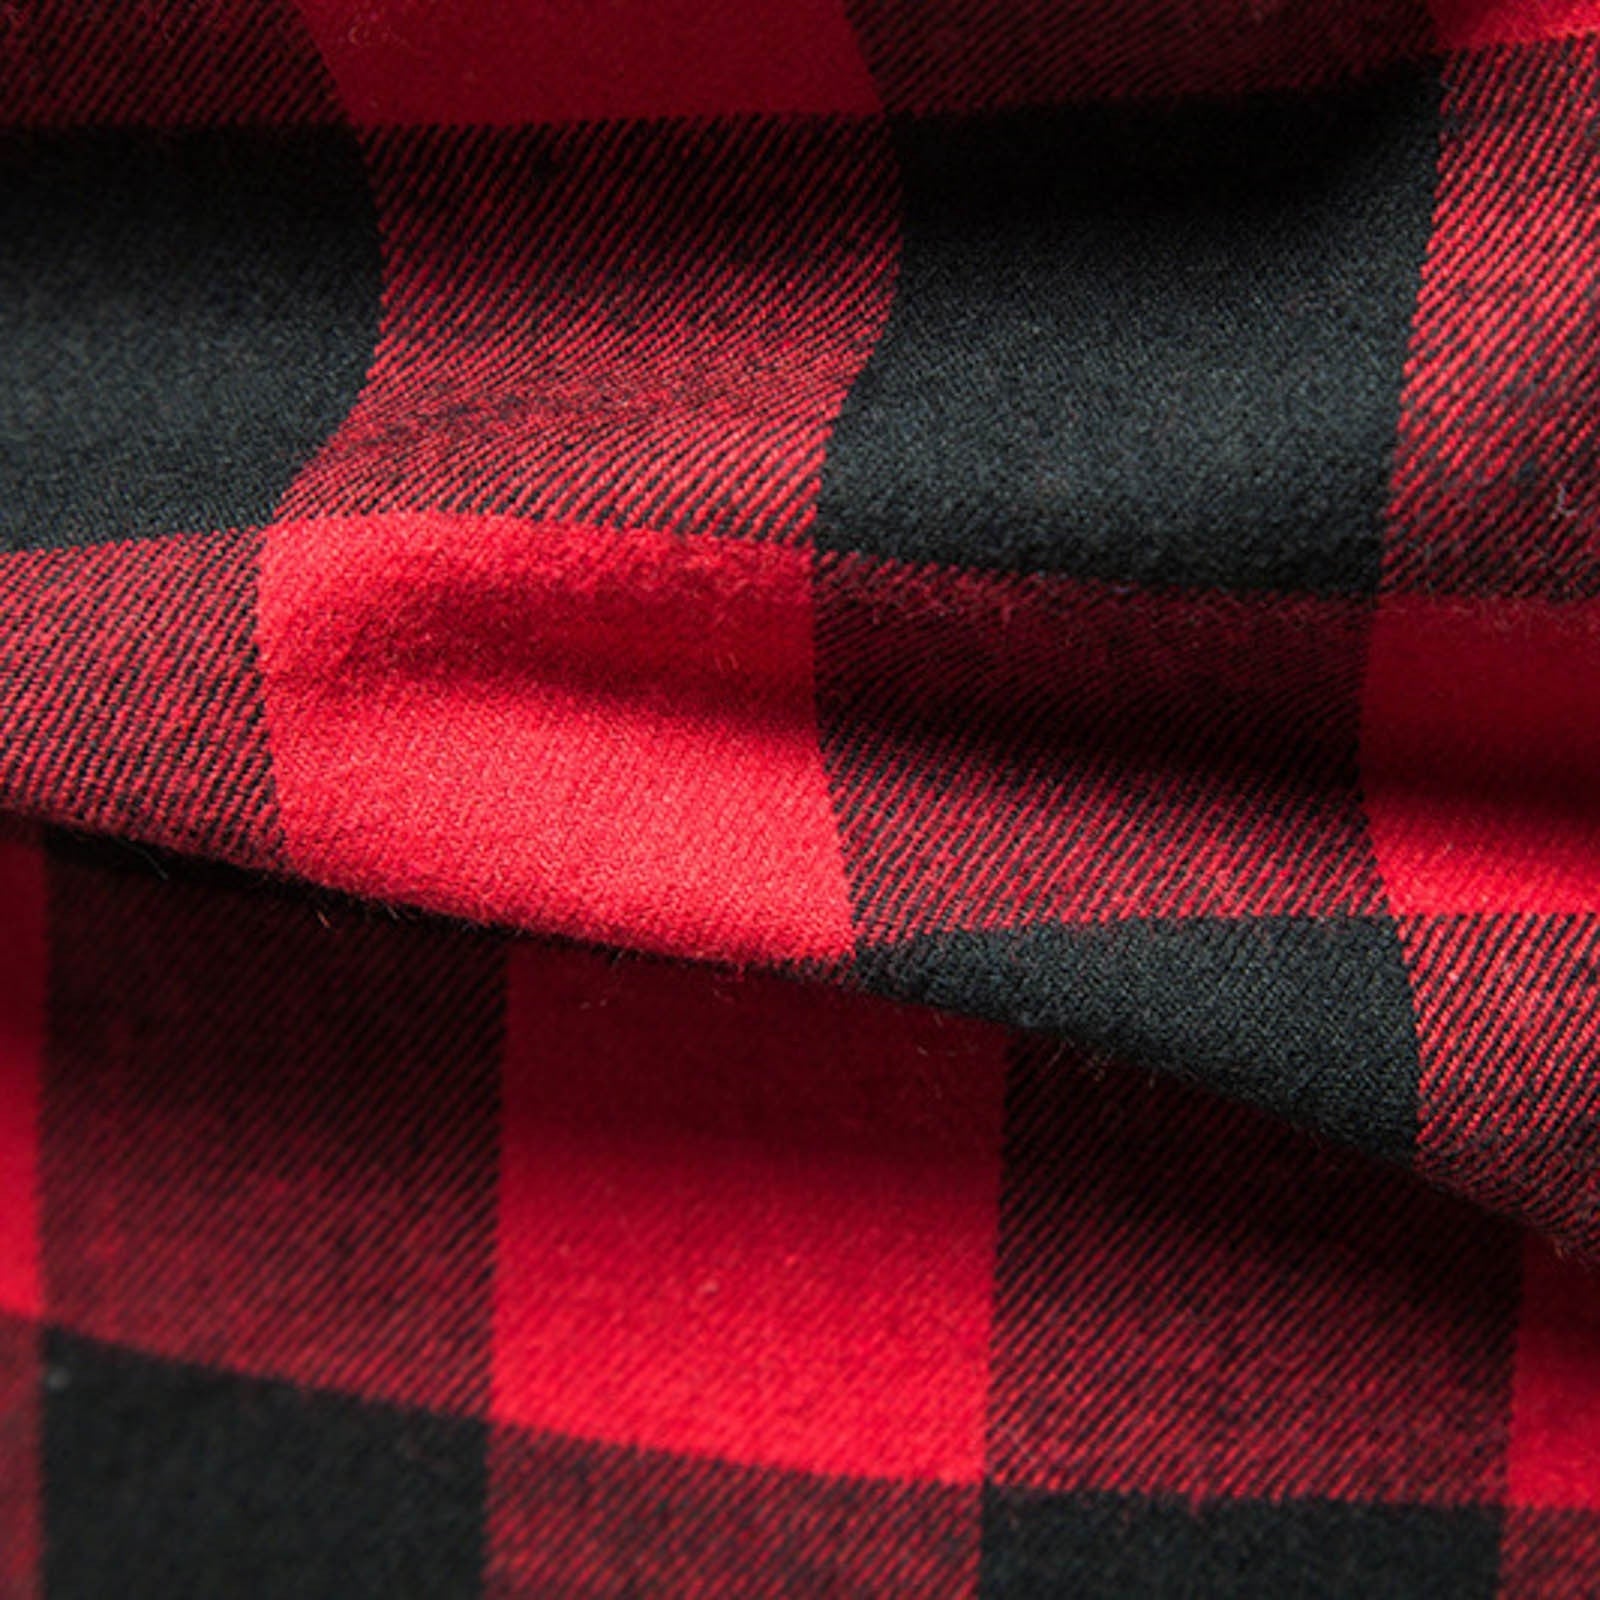 Red plaid flannelette cloth.